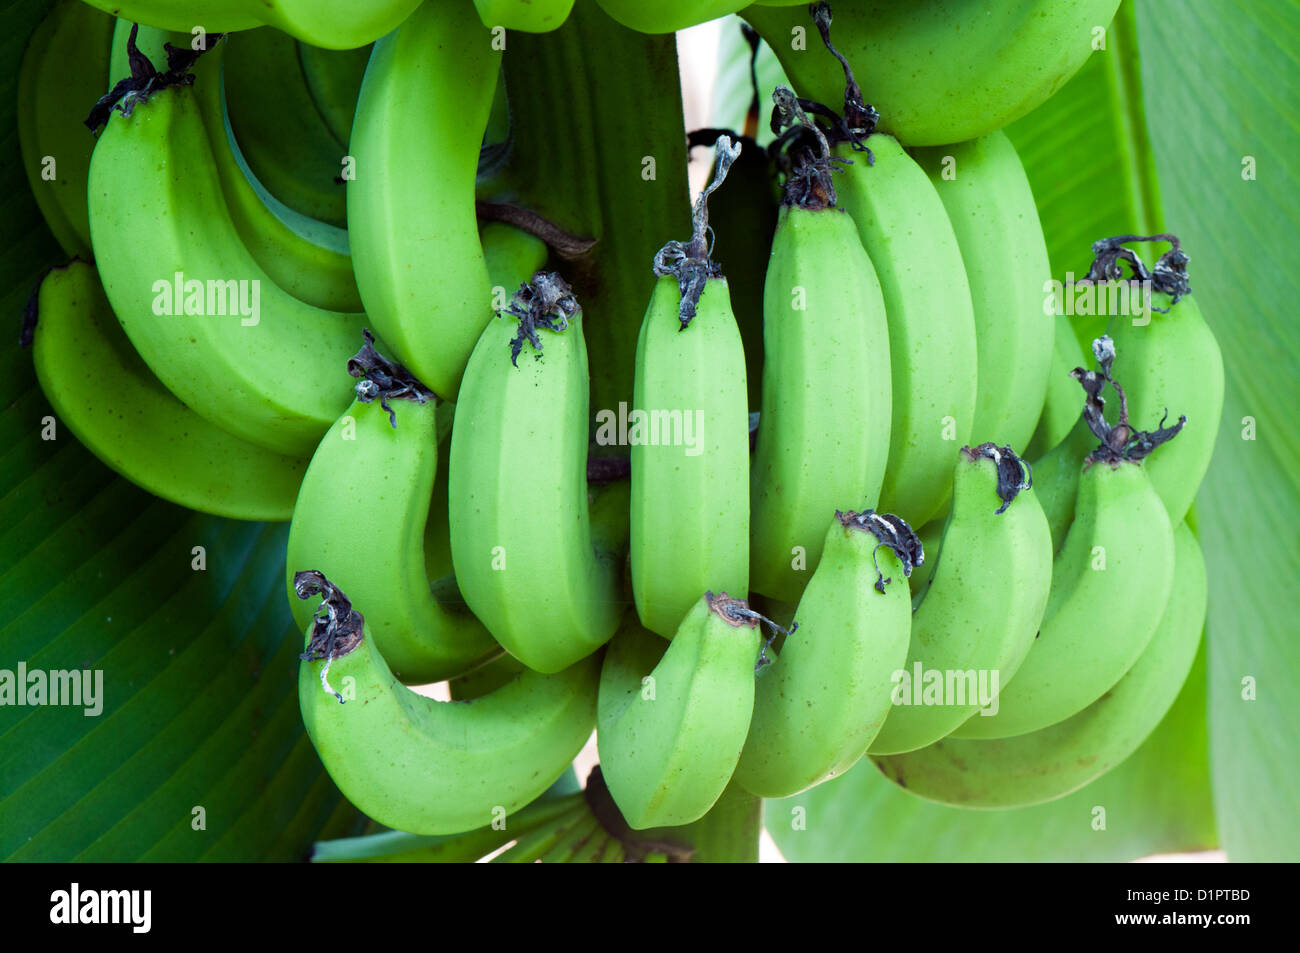 Green unripe bananas Stock Photo